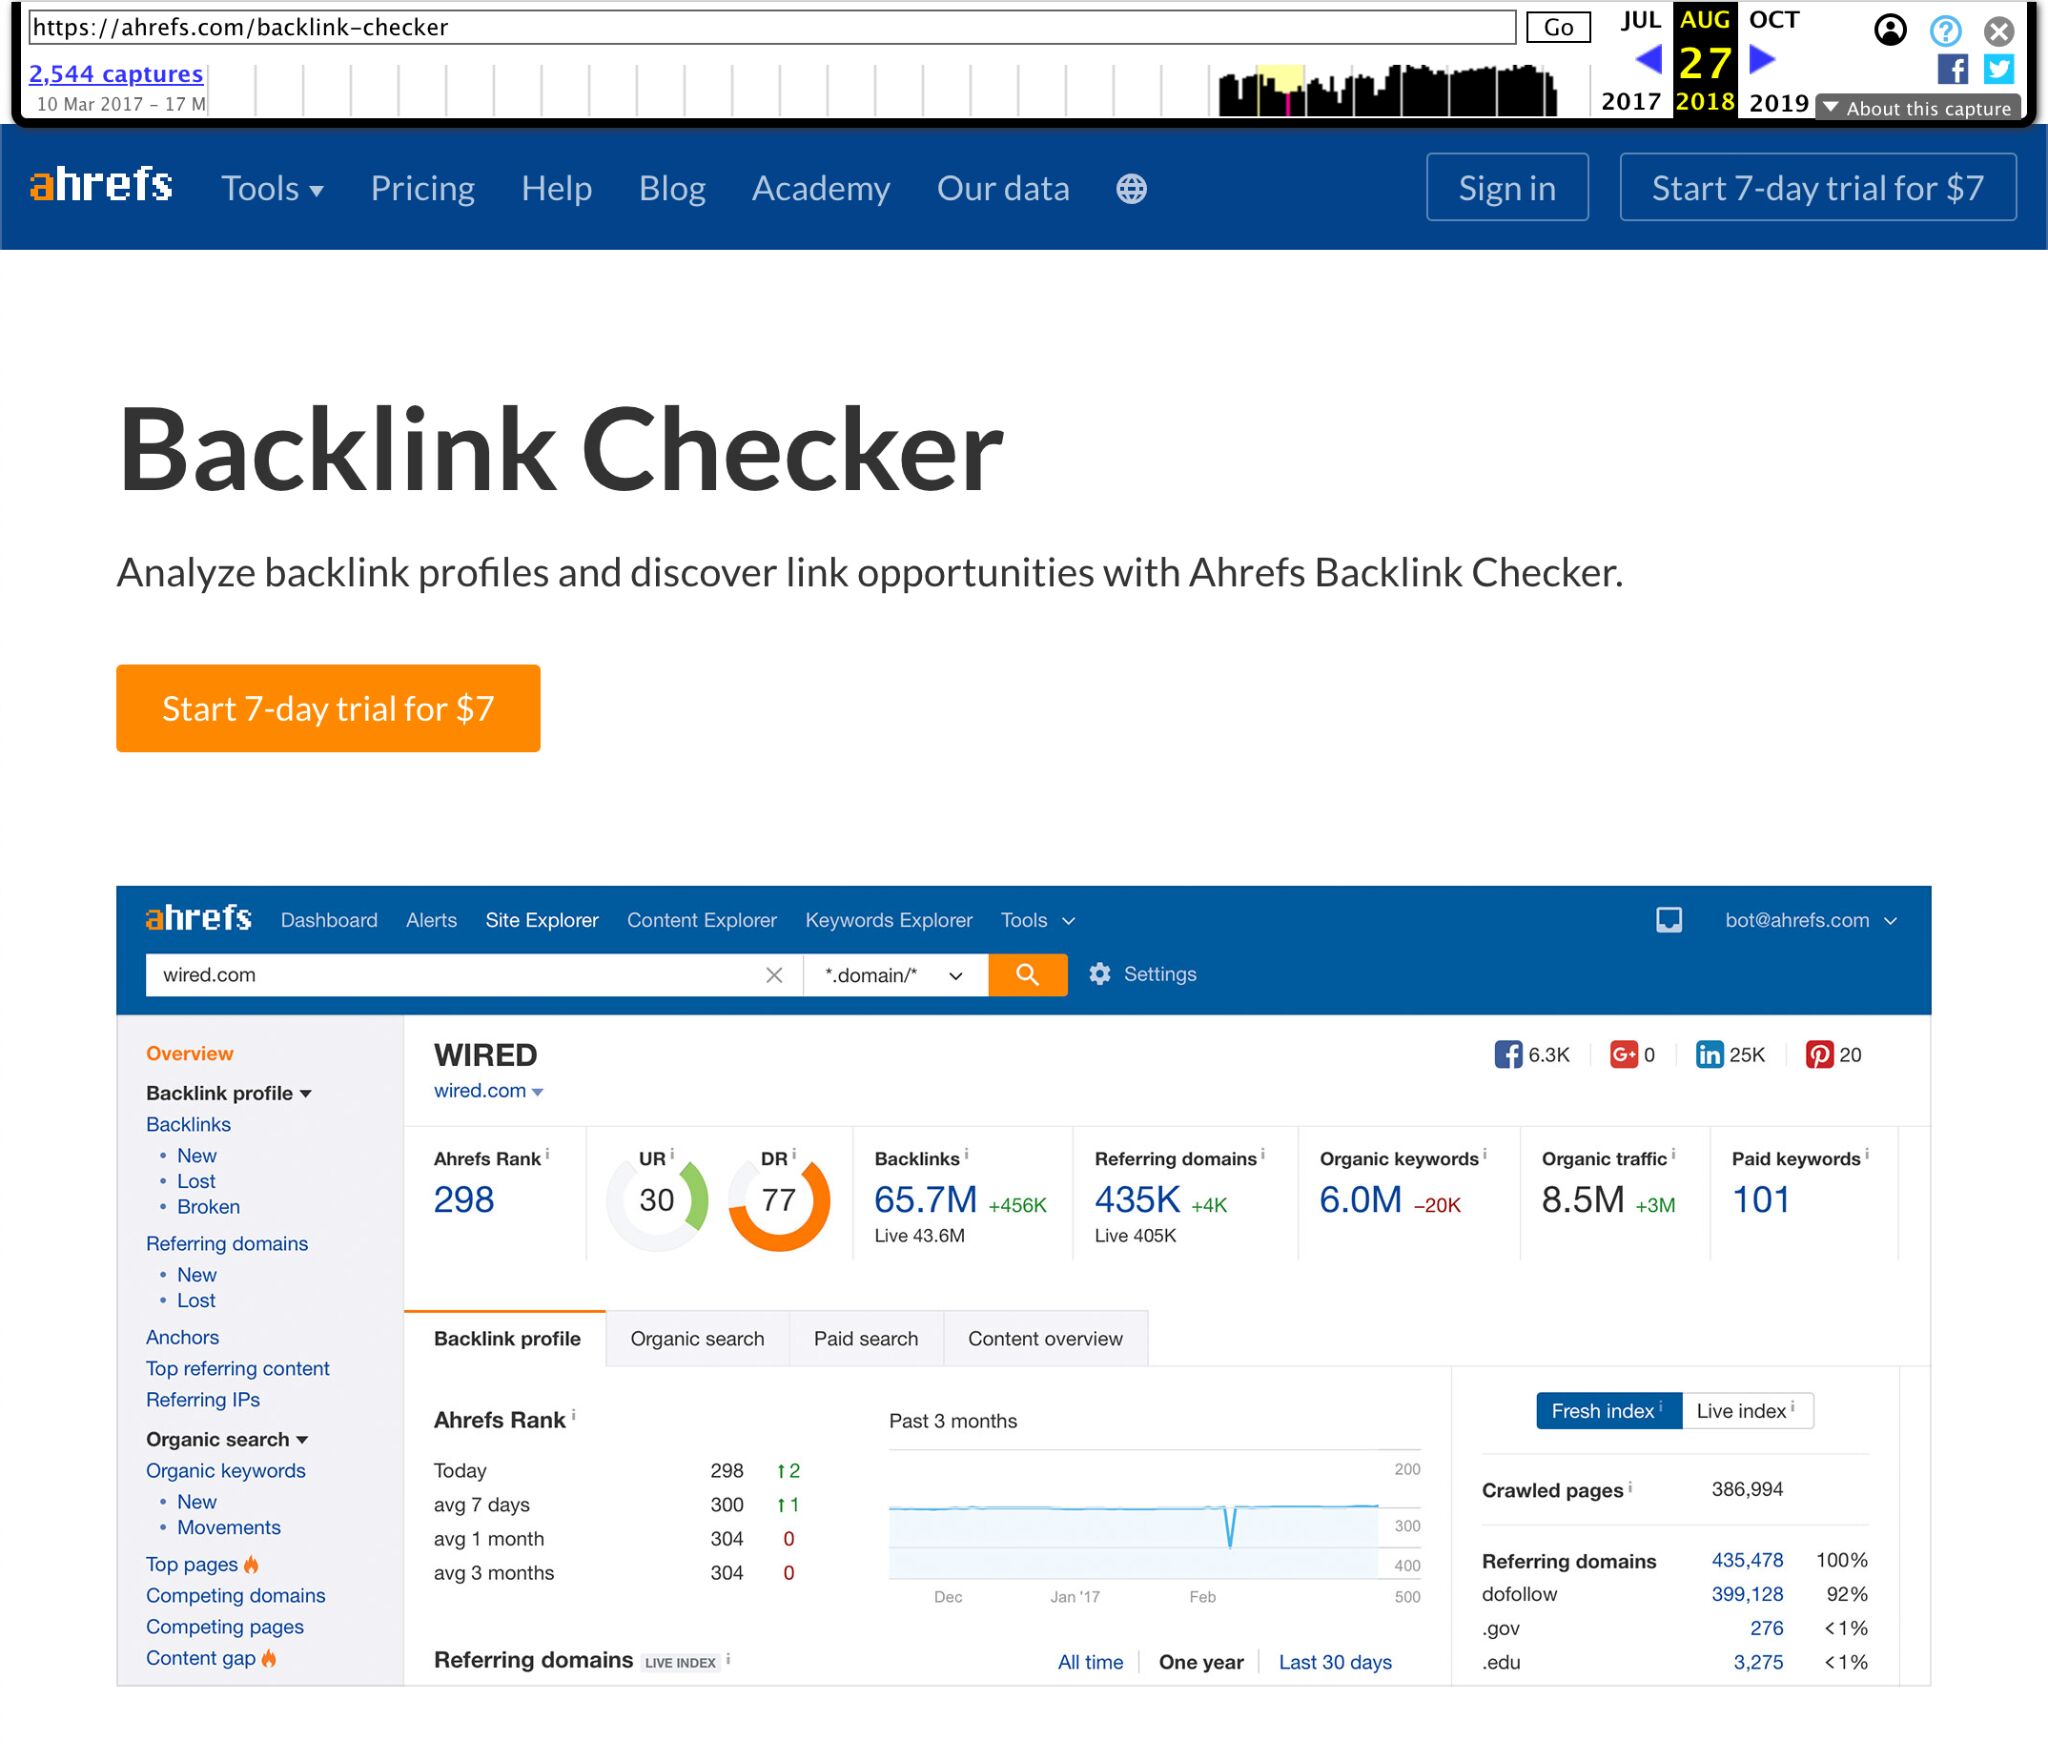 Our original "backlink checker" landing page